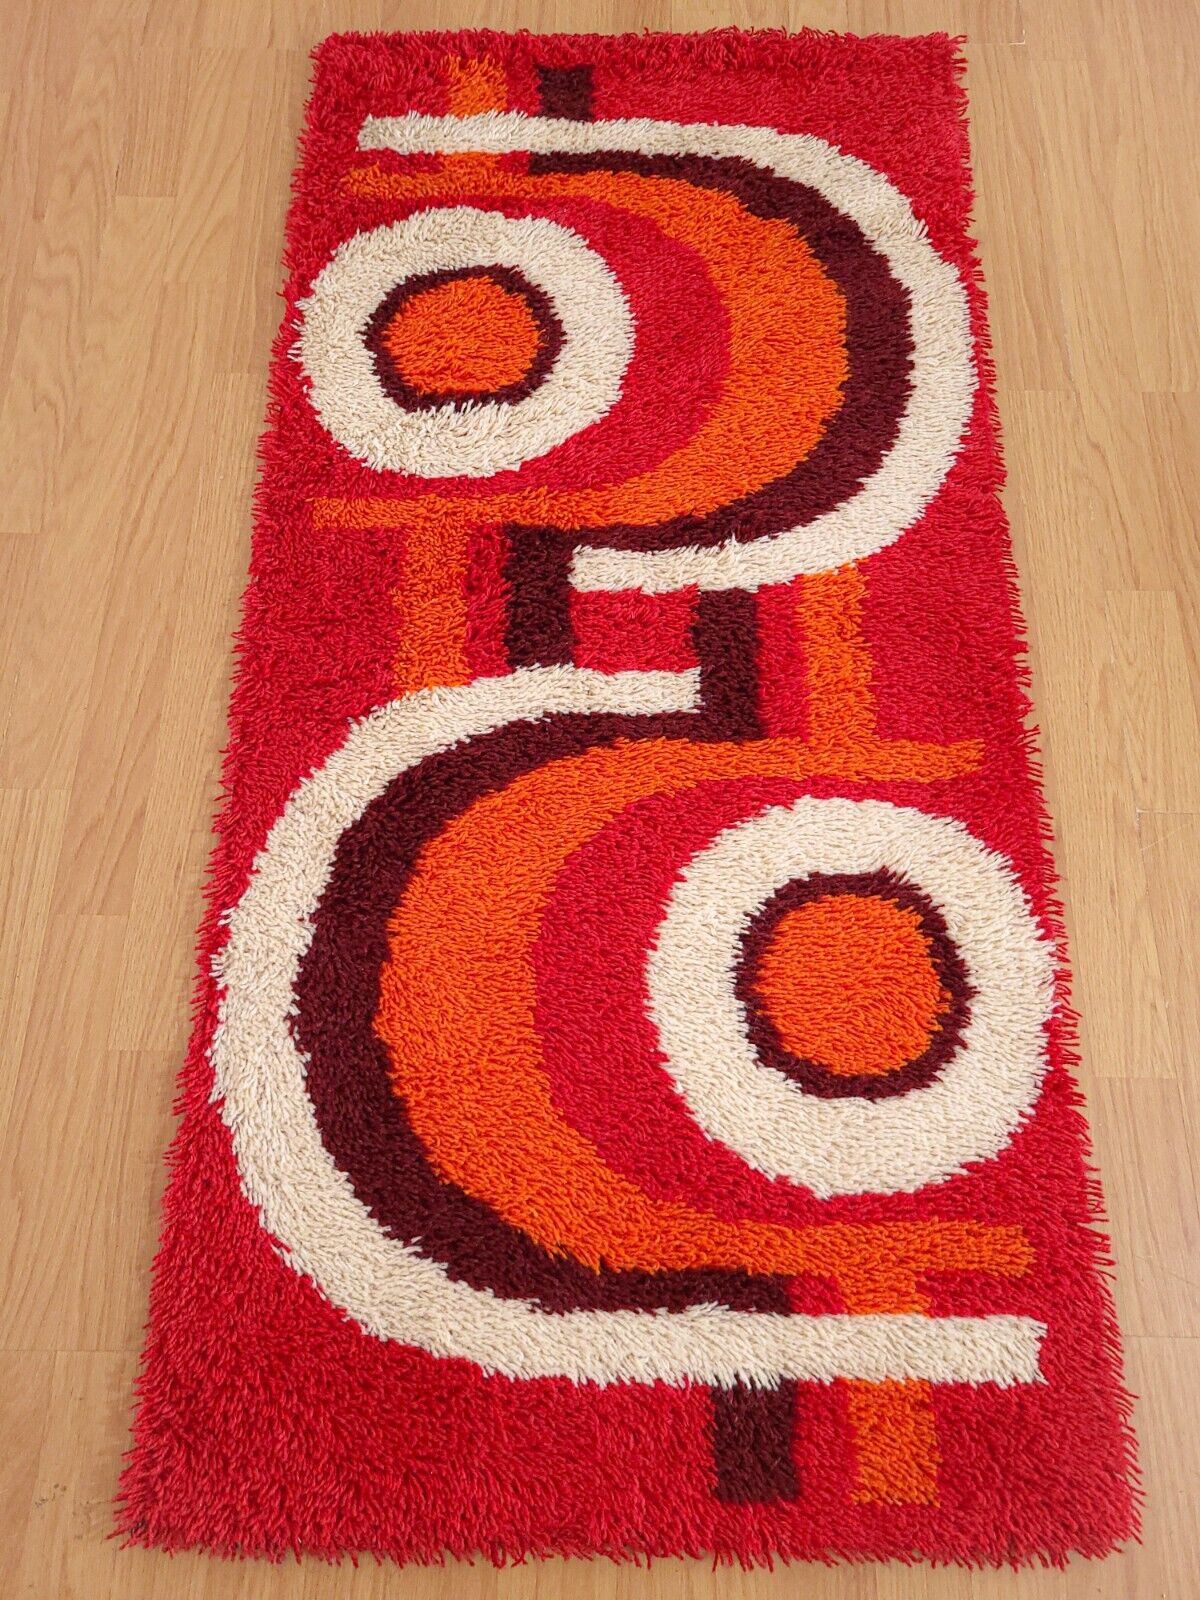 70s high pile acrylic wool rug red orange geometric pop art vintage mid century